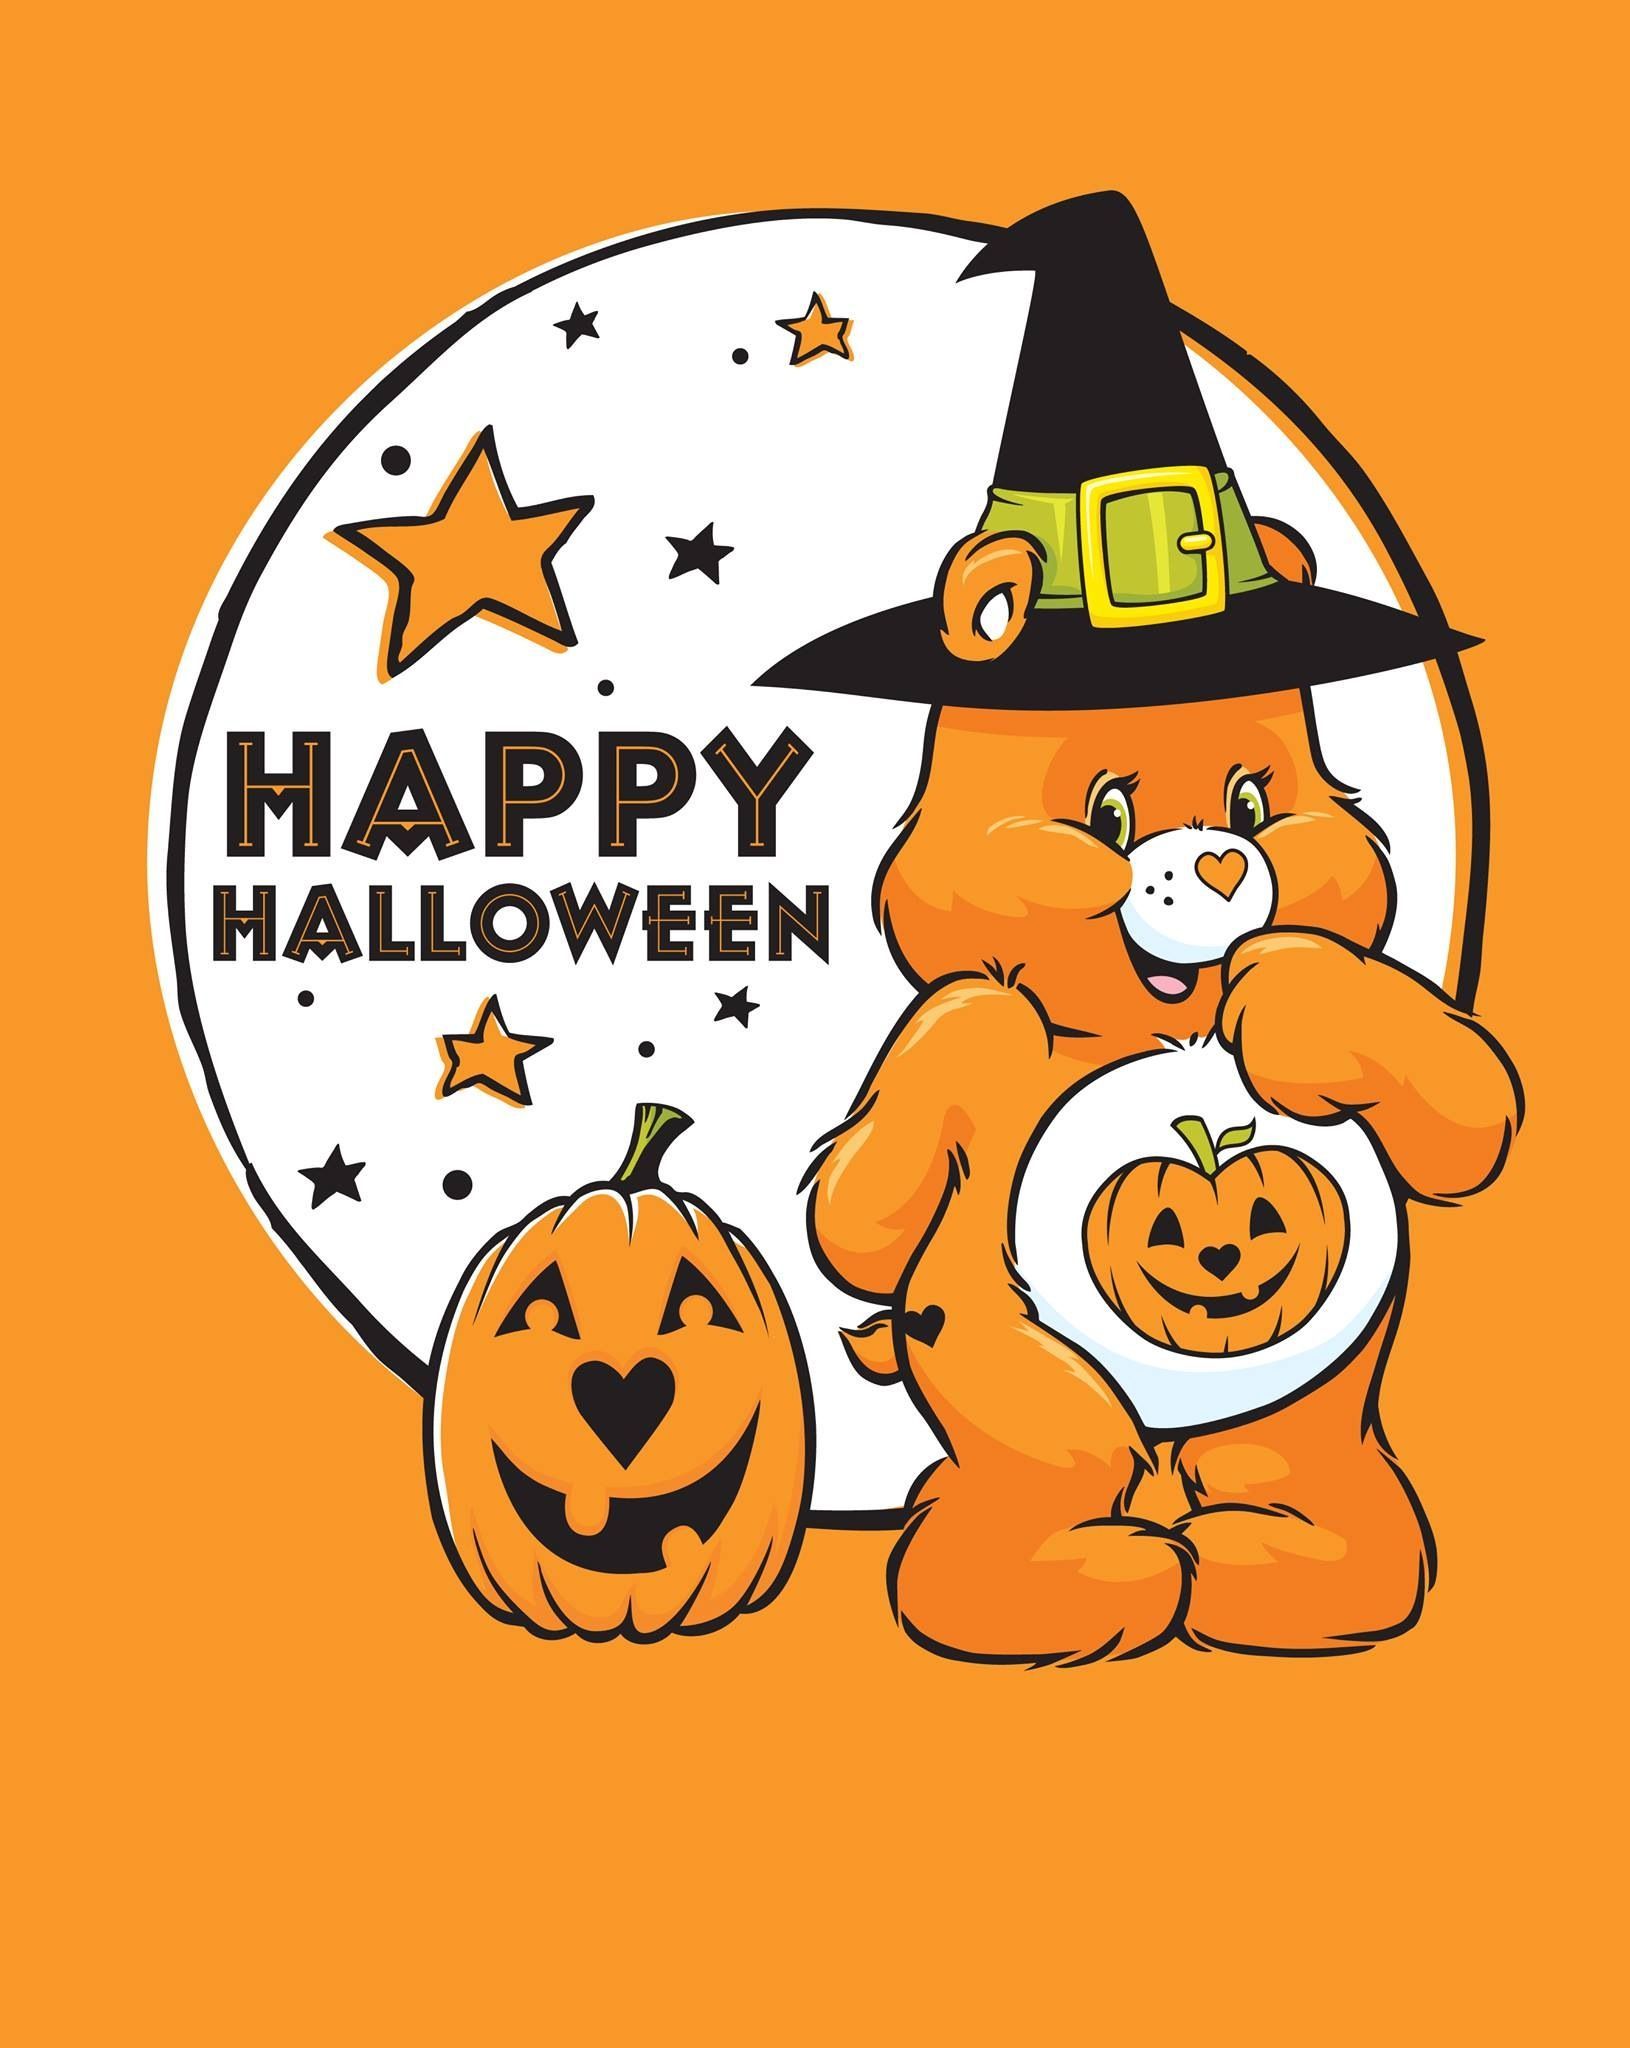 Care bear Halloween. Bear halloween, Happy halloween, Care bears